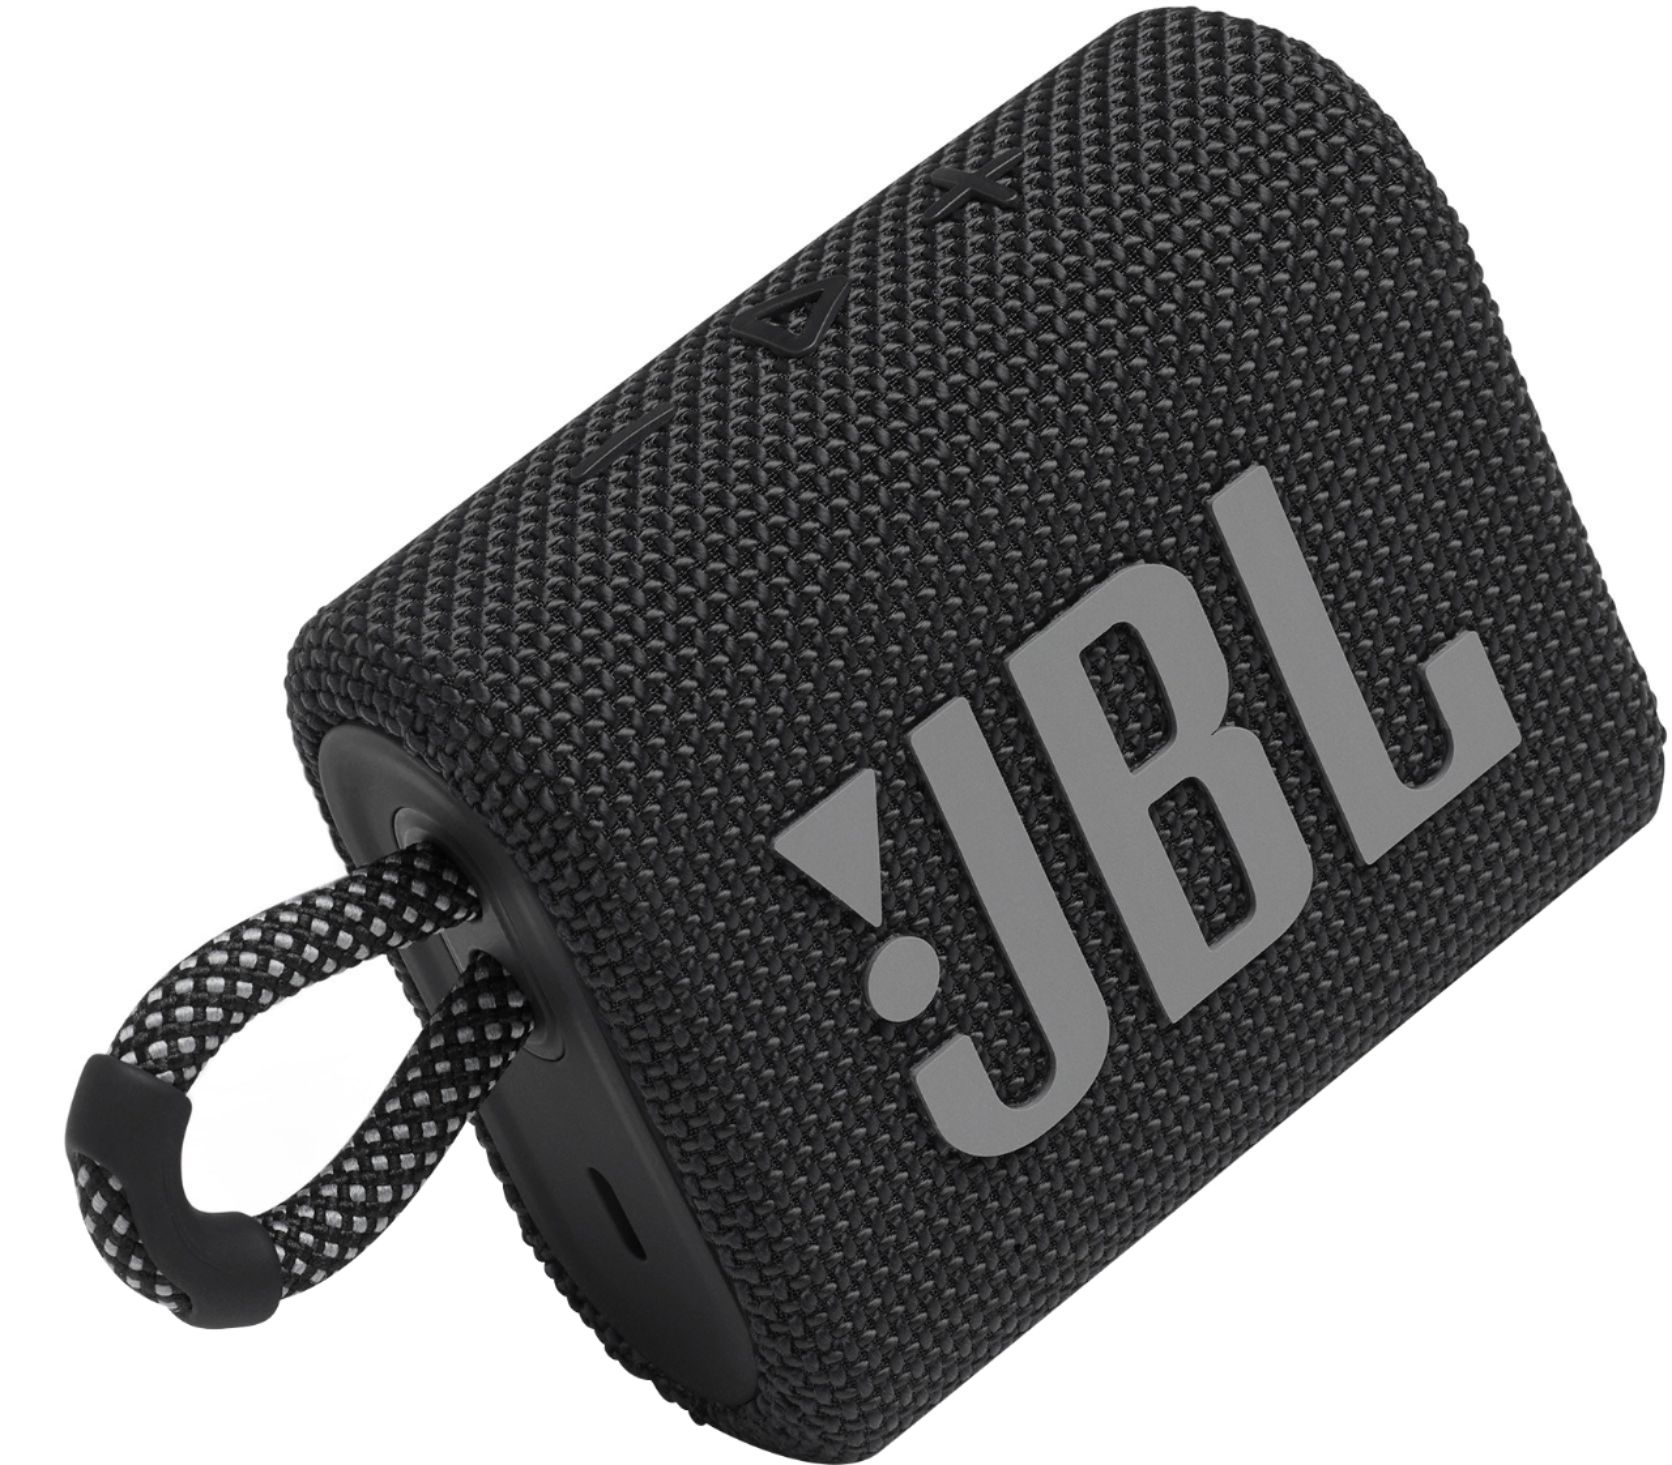 Reviewing The JBL GO 3 (Mini Bluetooth Speaker)